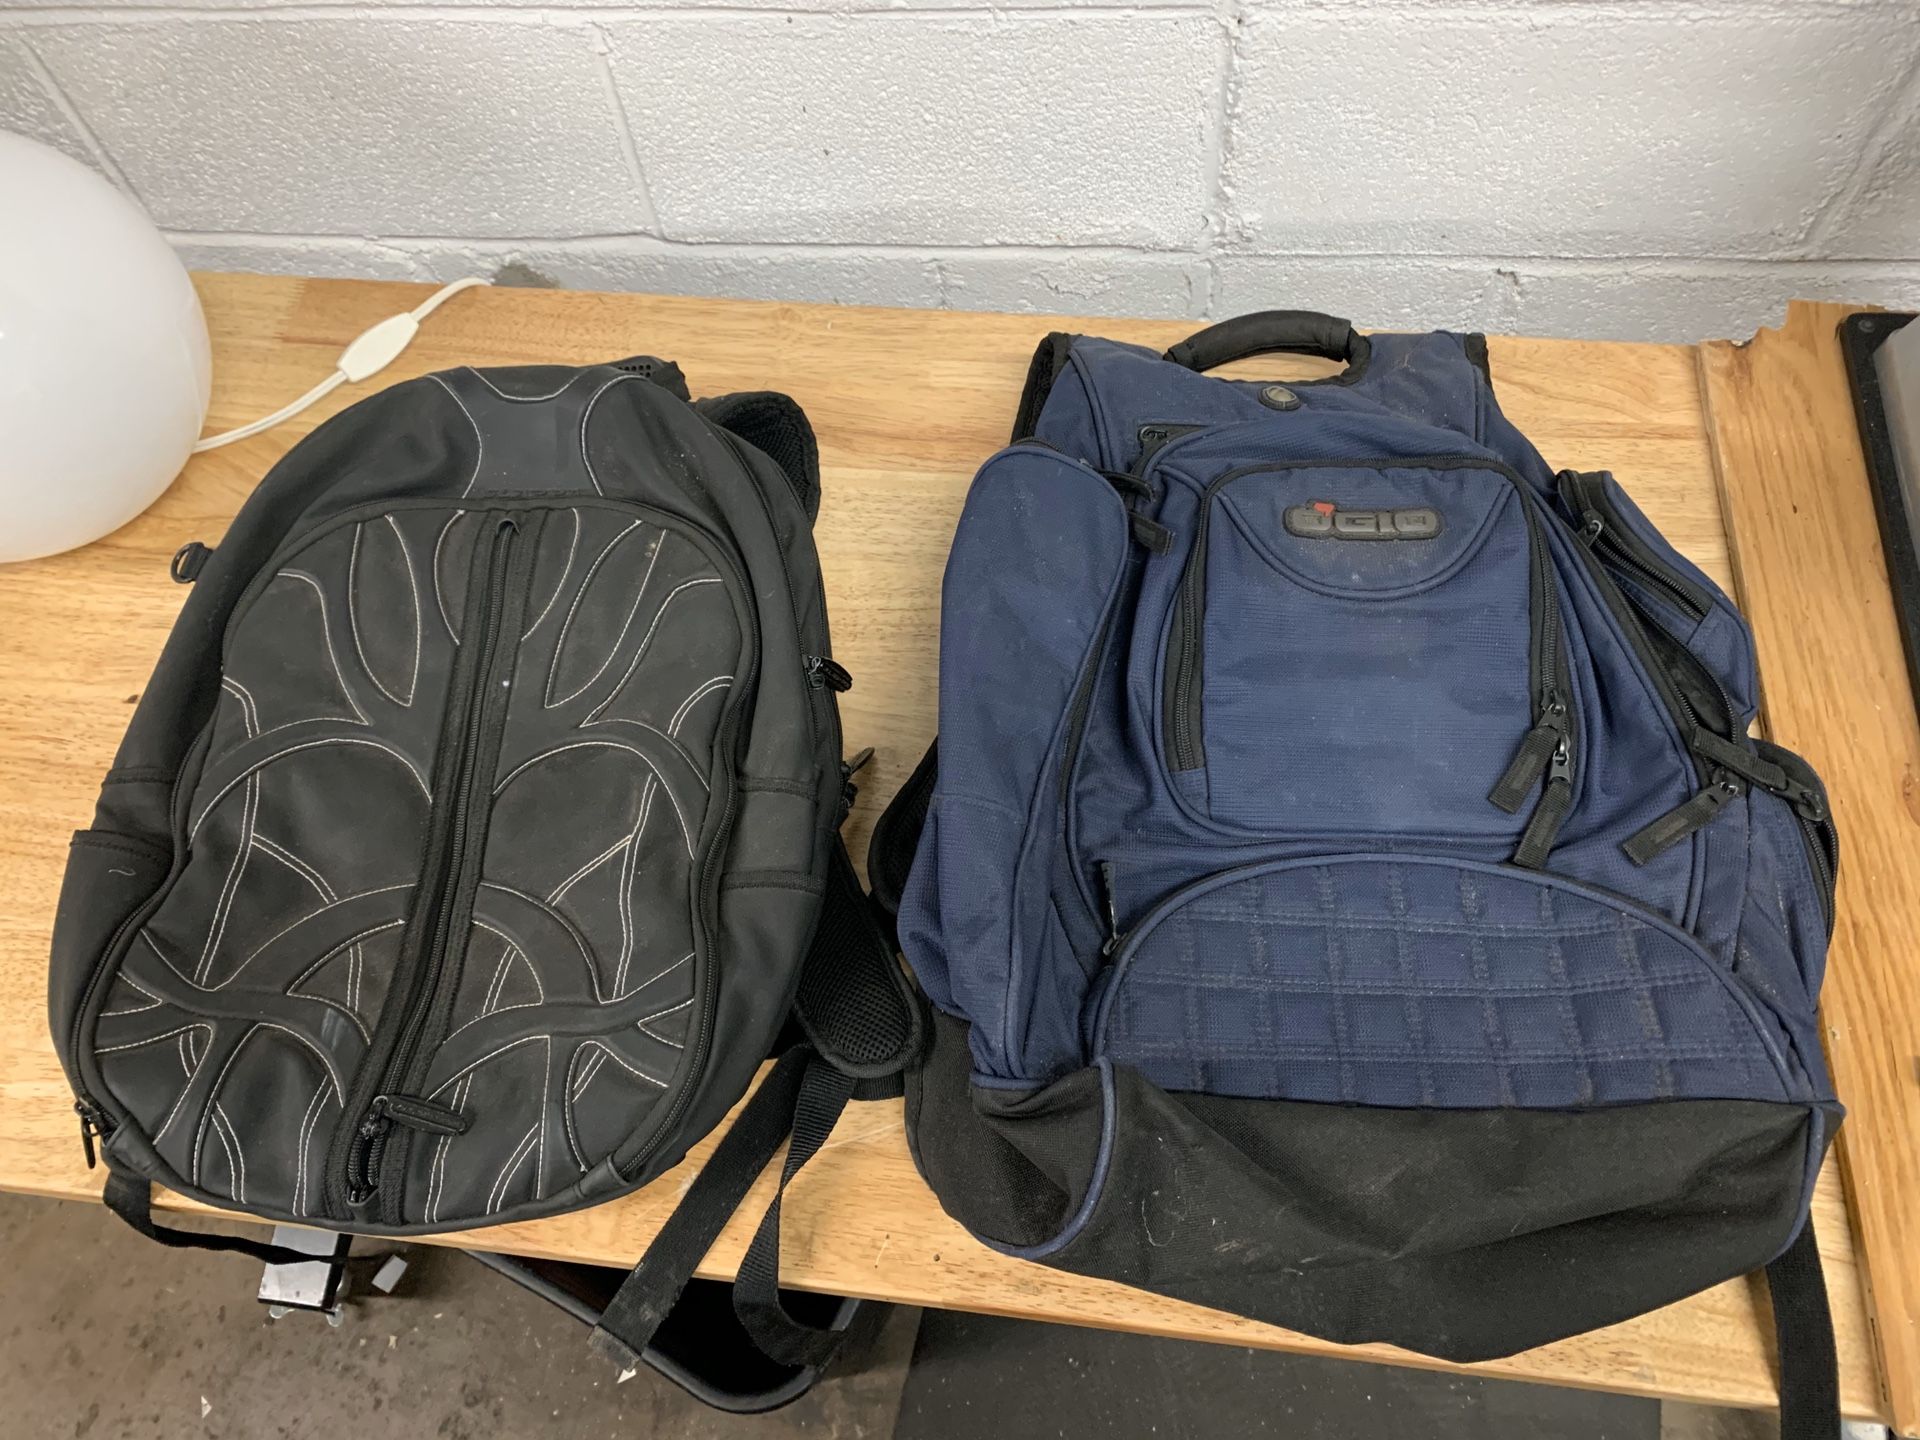 Two backpacks